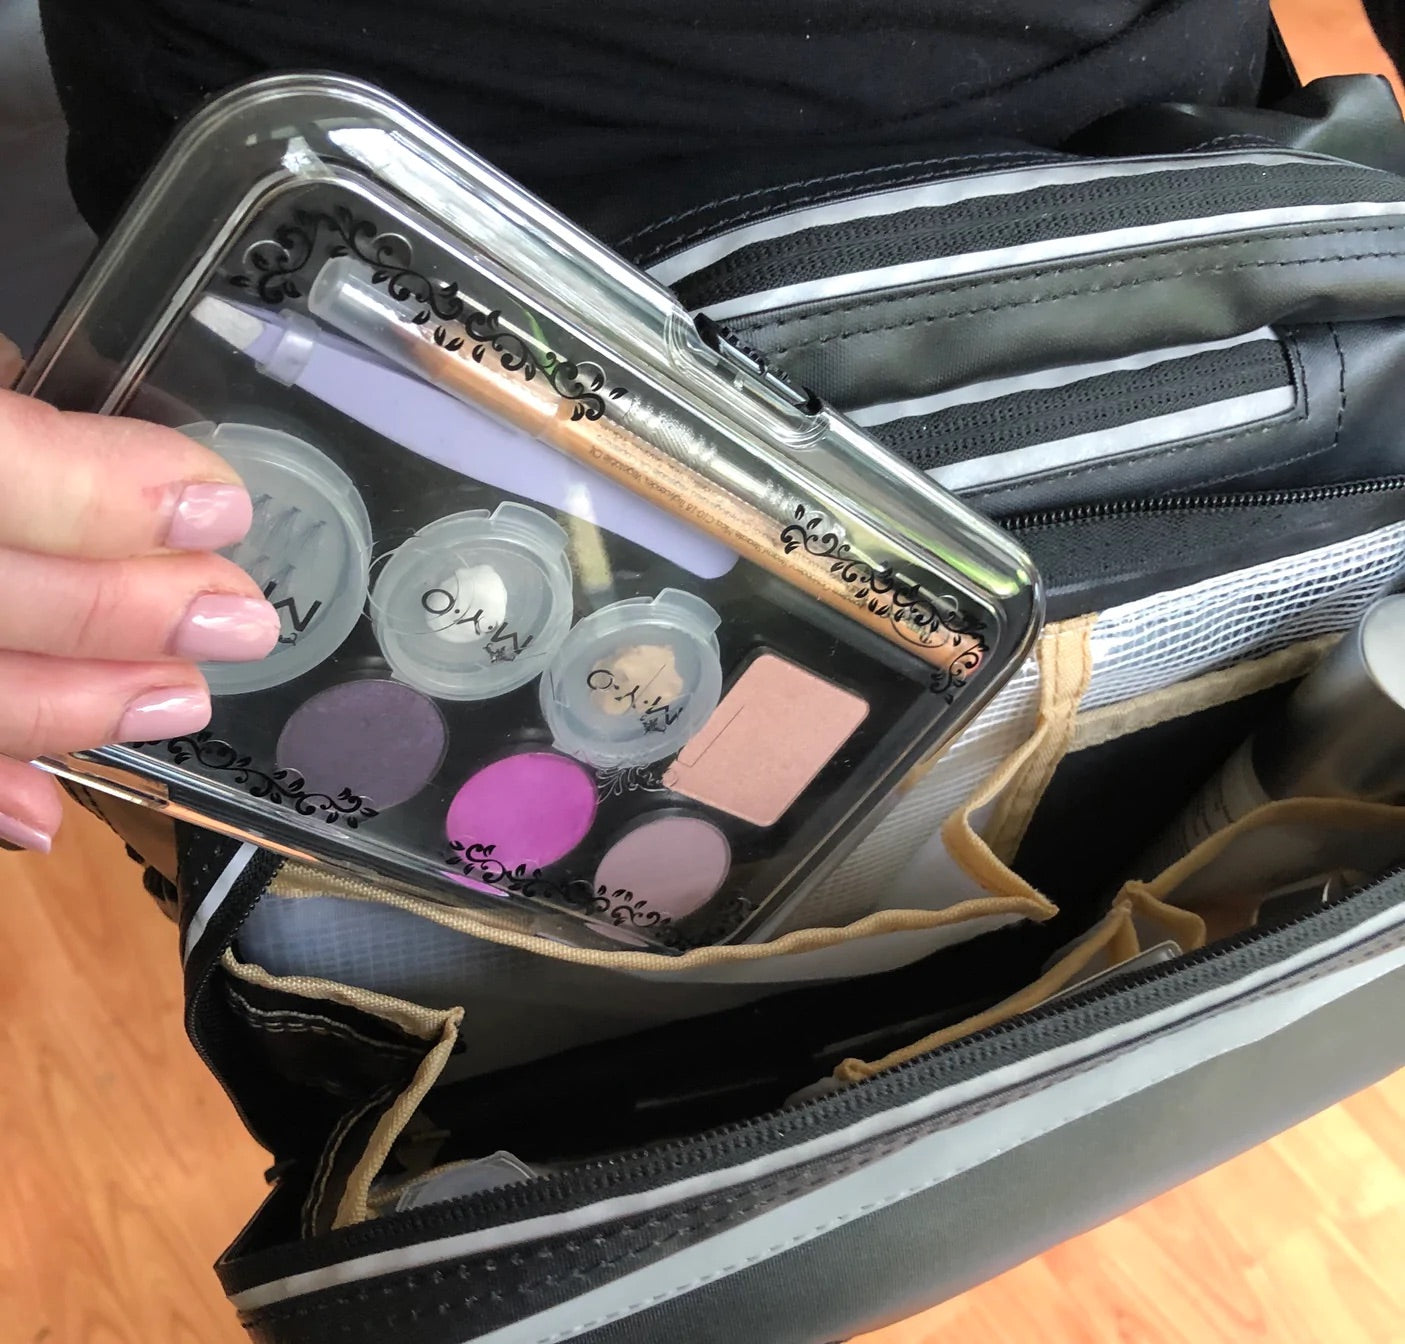 Travel Toiletry Gadget Bag Shaving Pouch Make-up Kit - Multipurpose Mi –